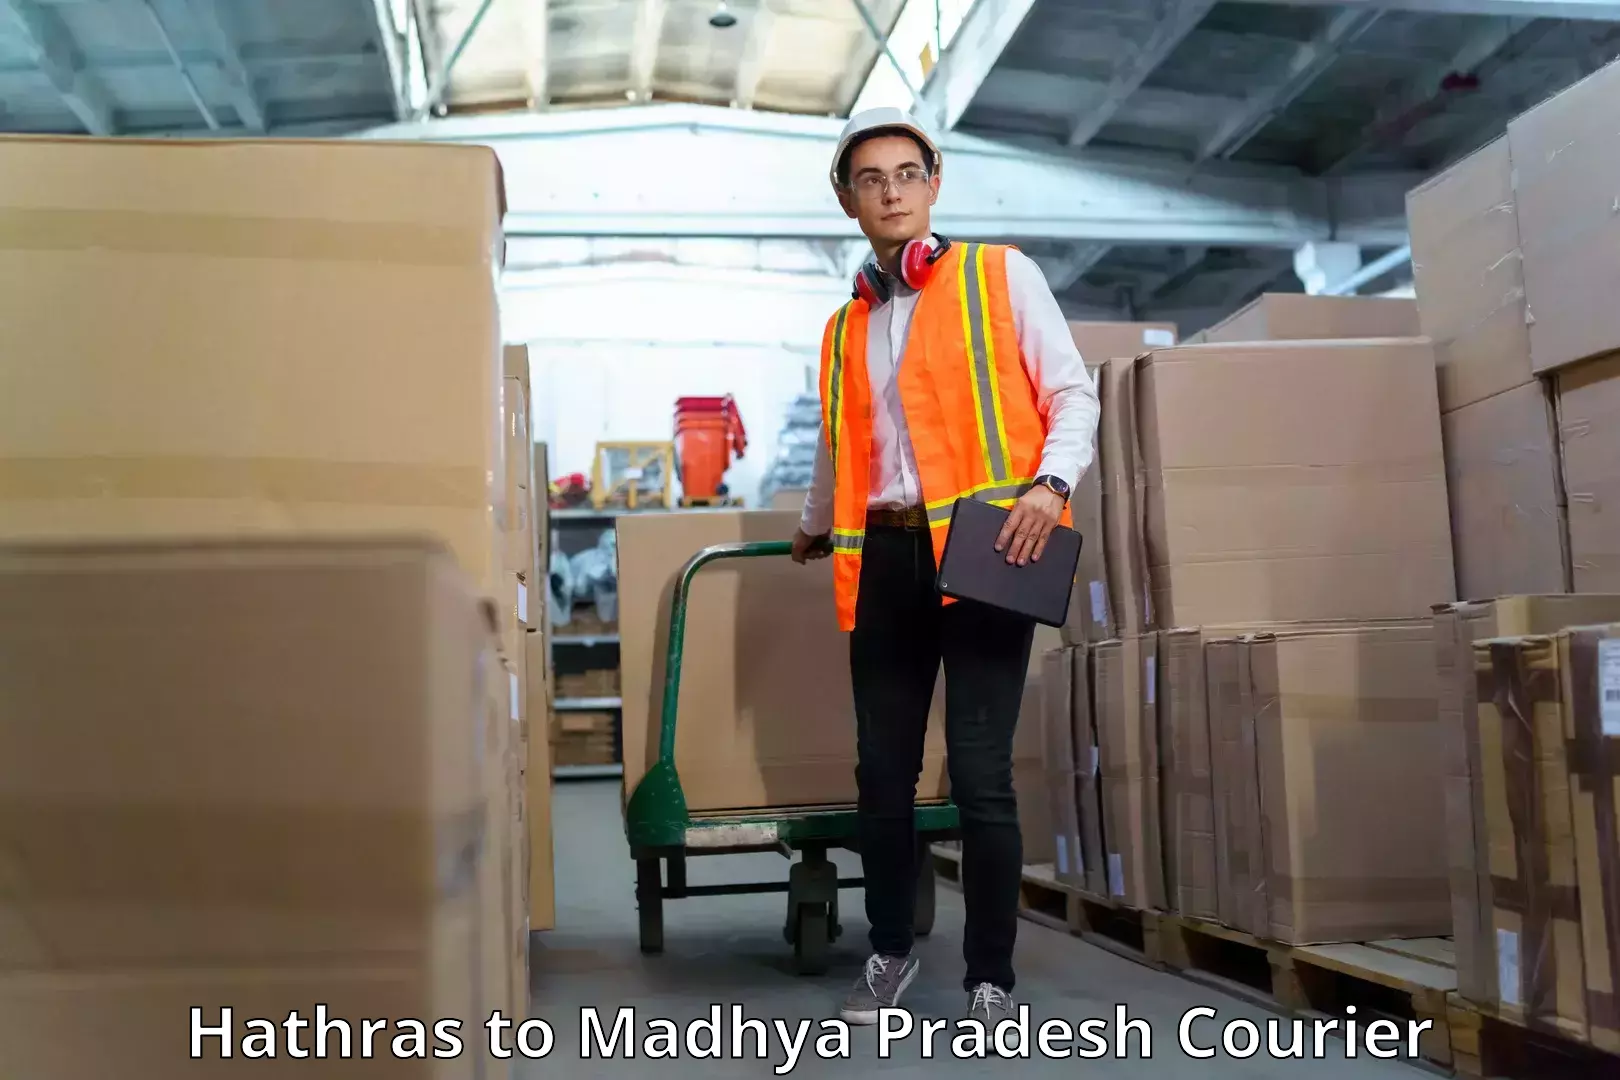 Fast delivery service Hathras to Sendhwa